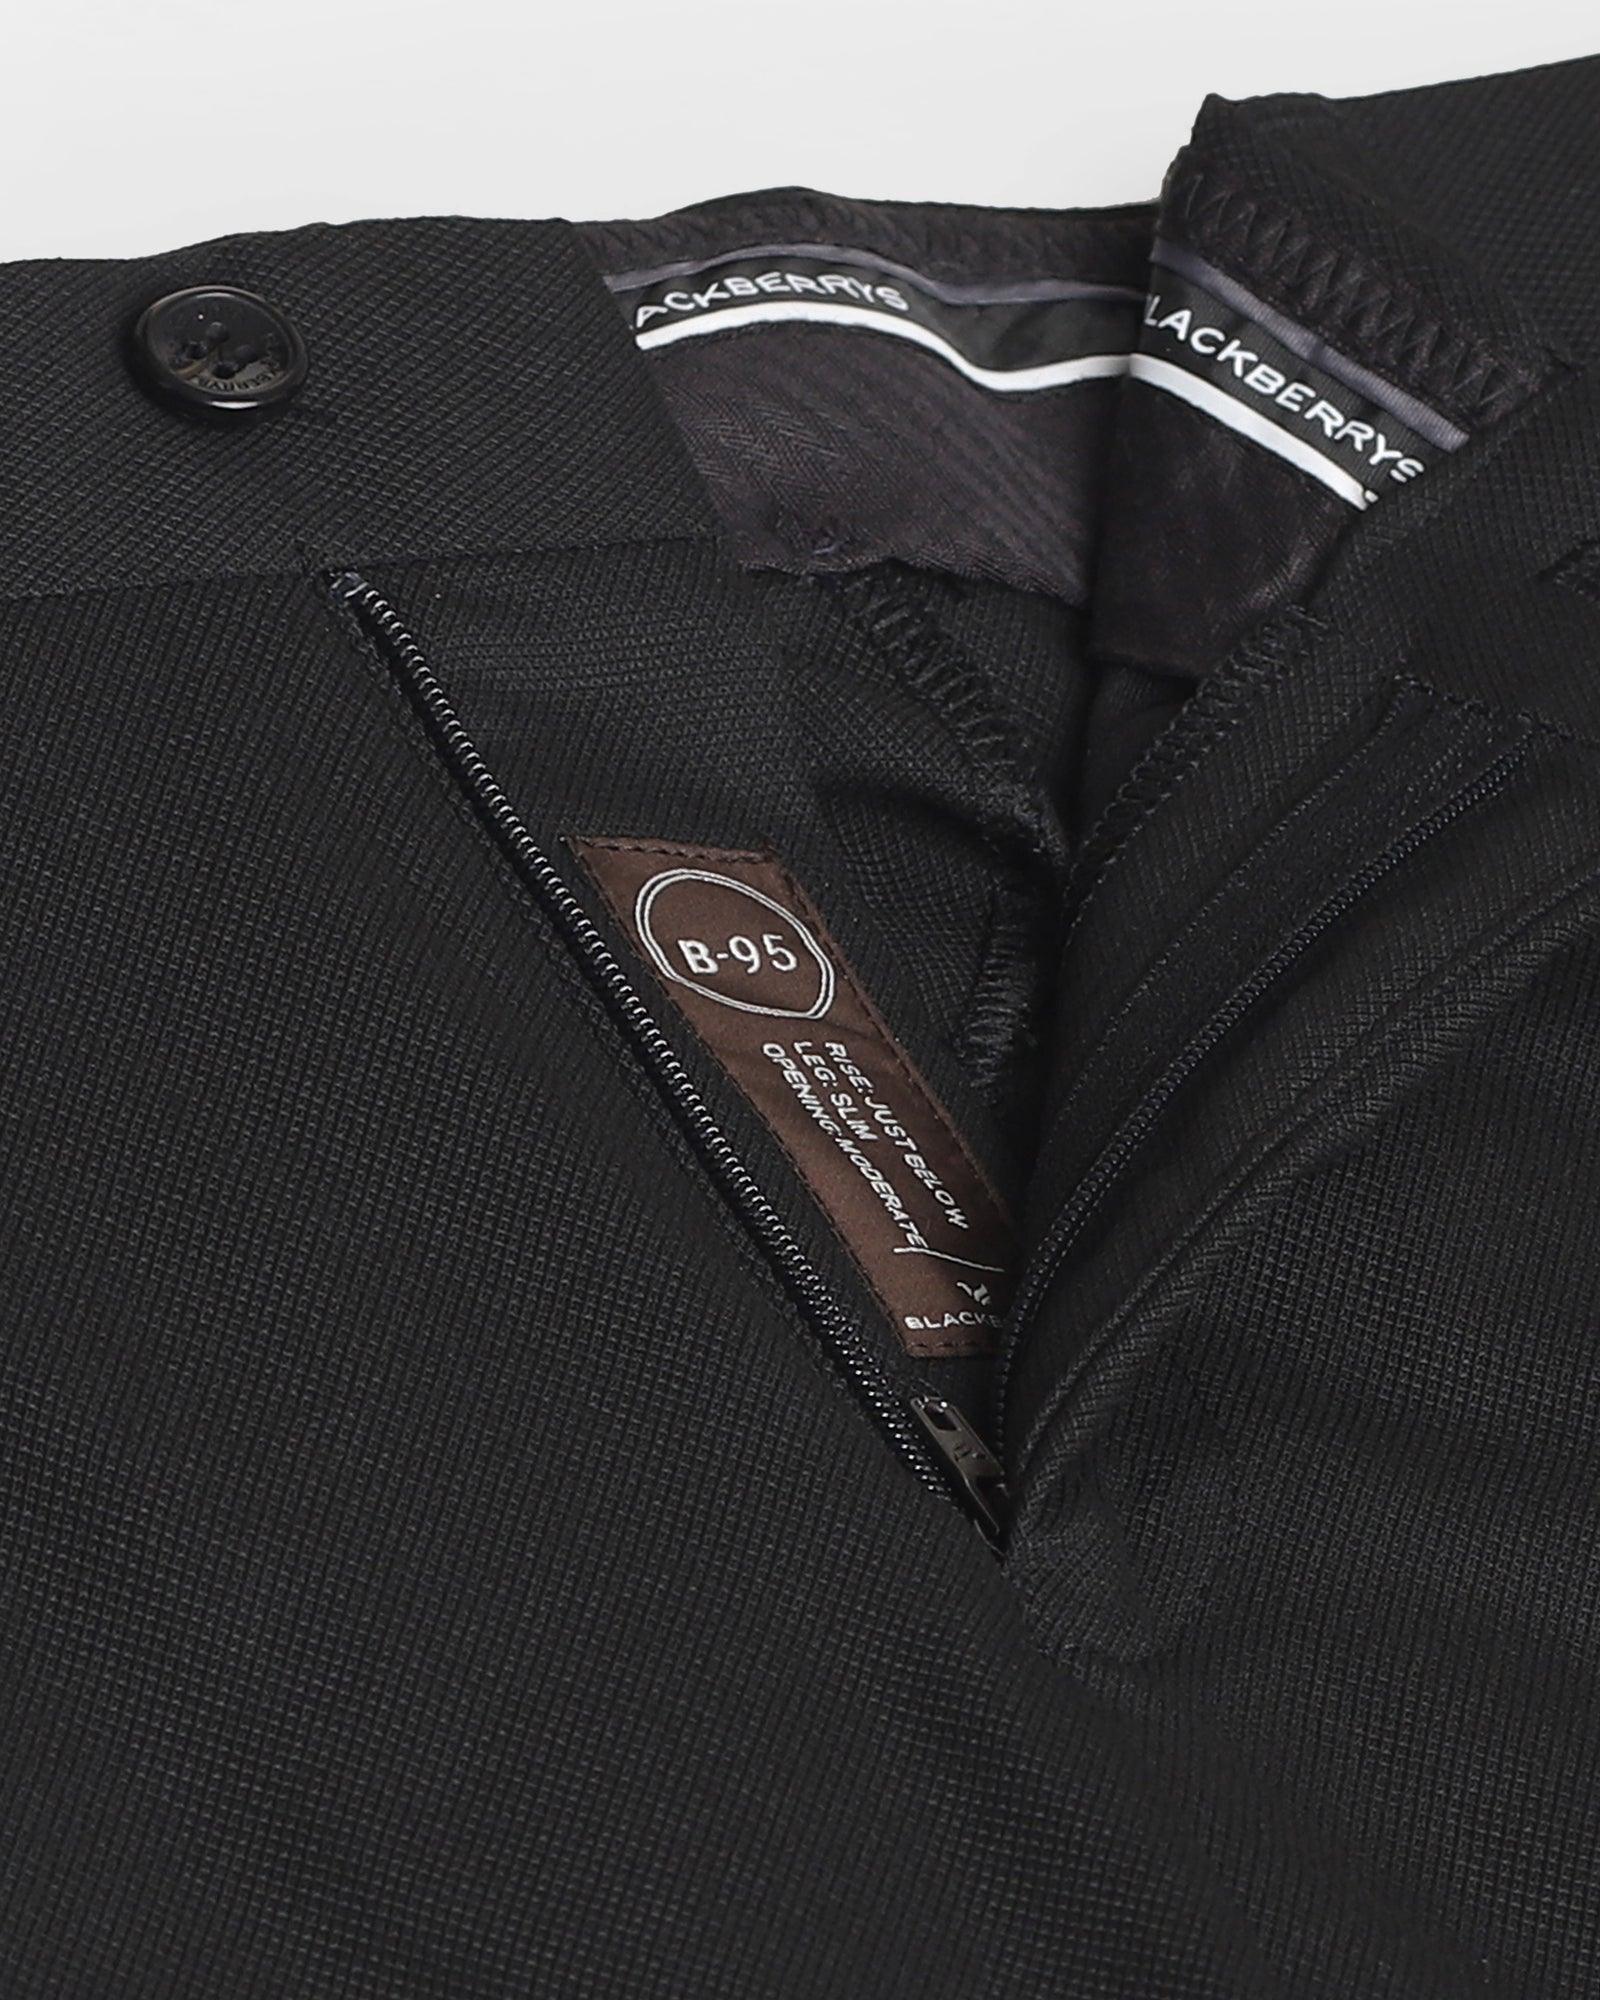 Slim Comfort B-95 Formal Black Textured Trouser - Hector